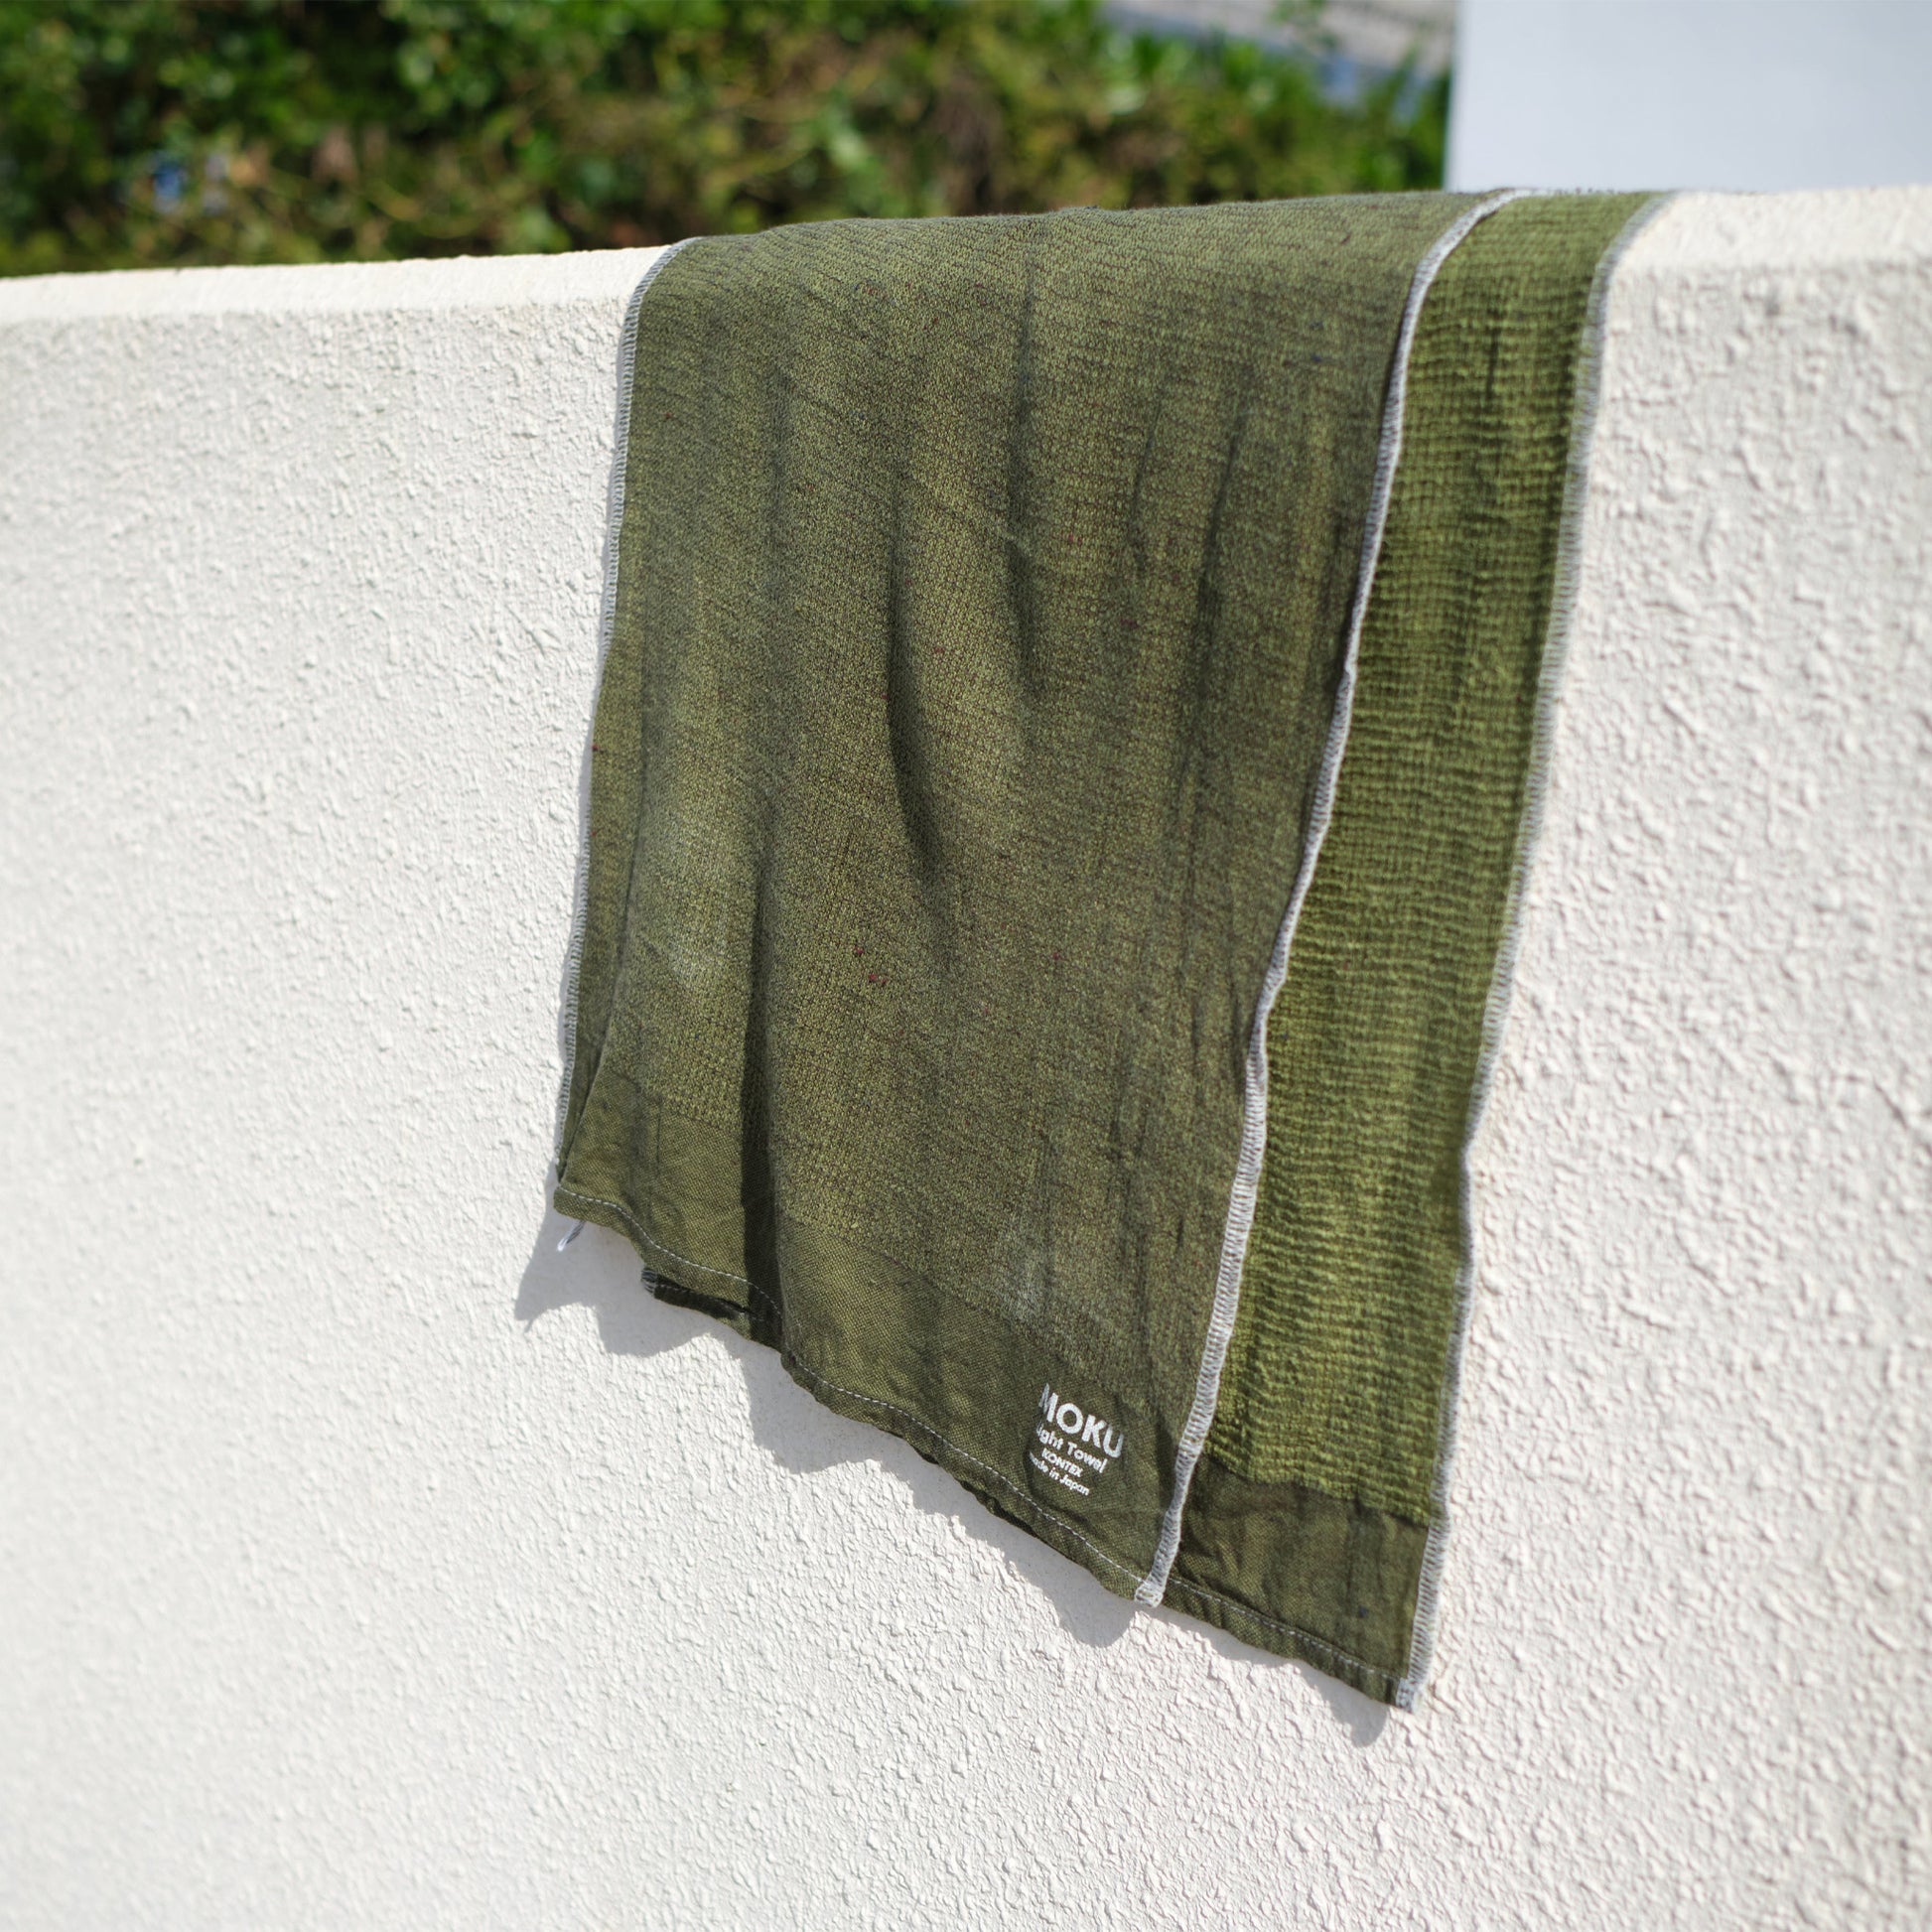 Moku Linen Towel Hand Towel (M) / Blue